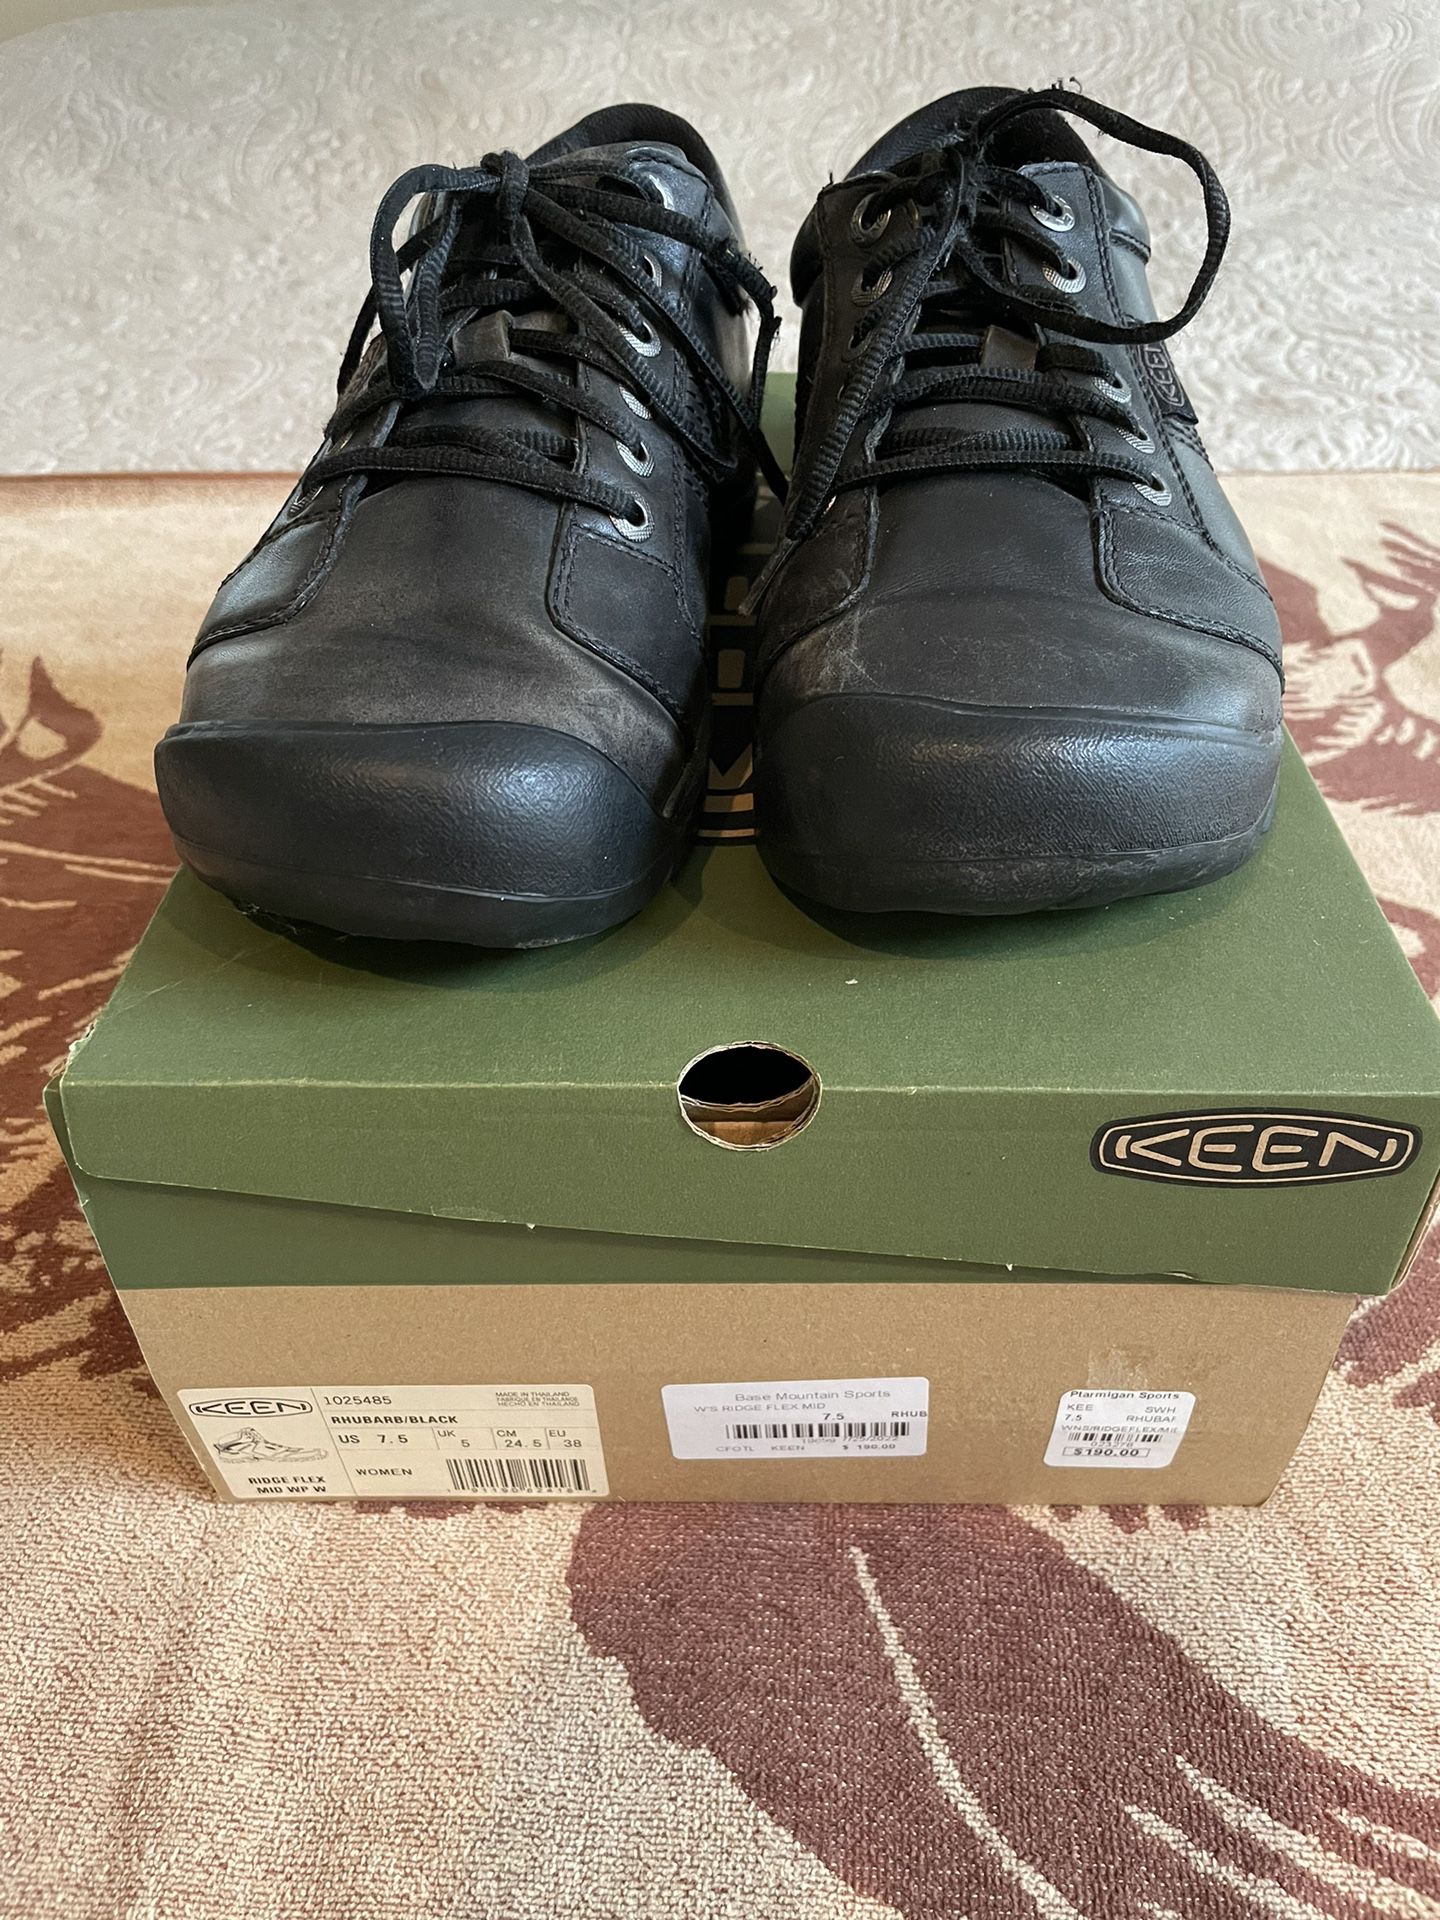 Men’s Keen Shoes